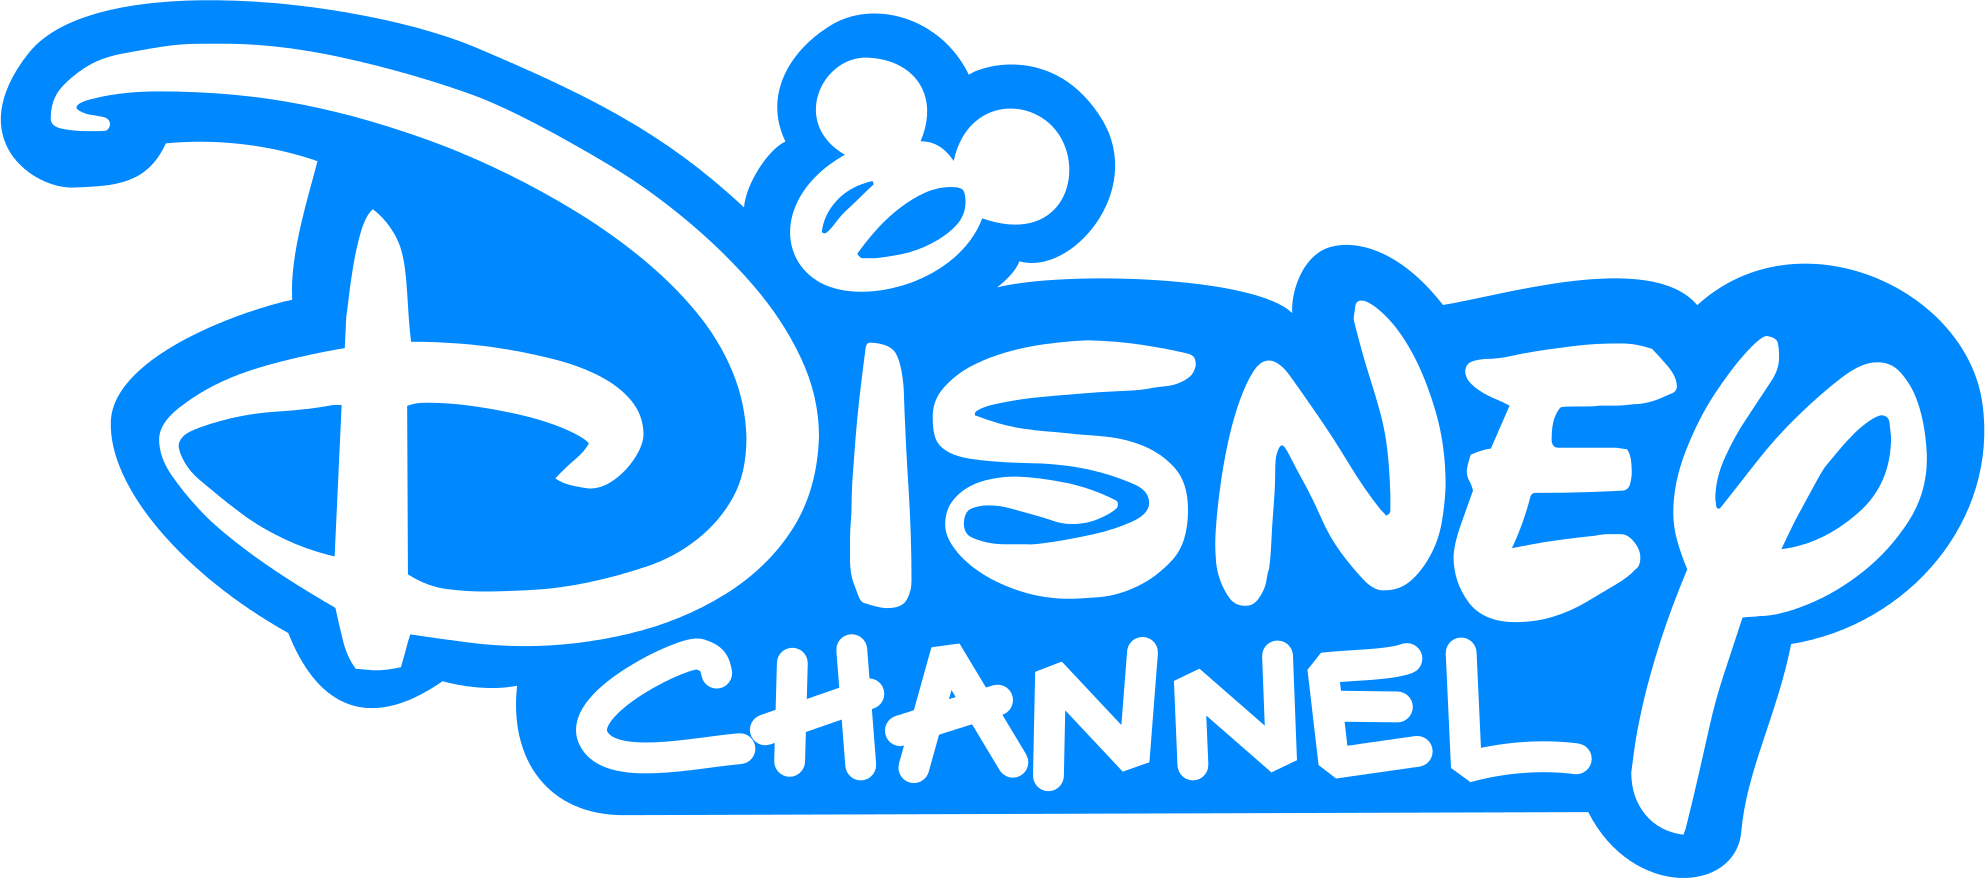 2015 Disney Channel Logo - Disney Channel.png